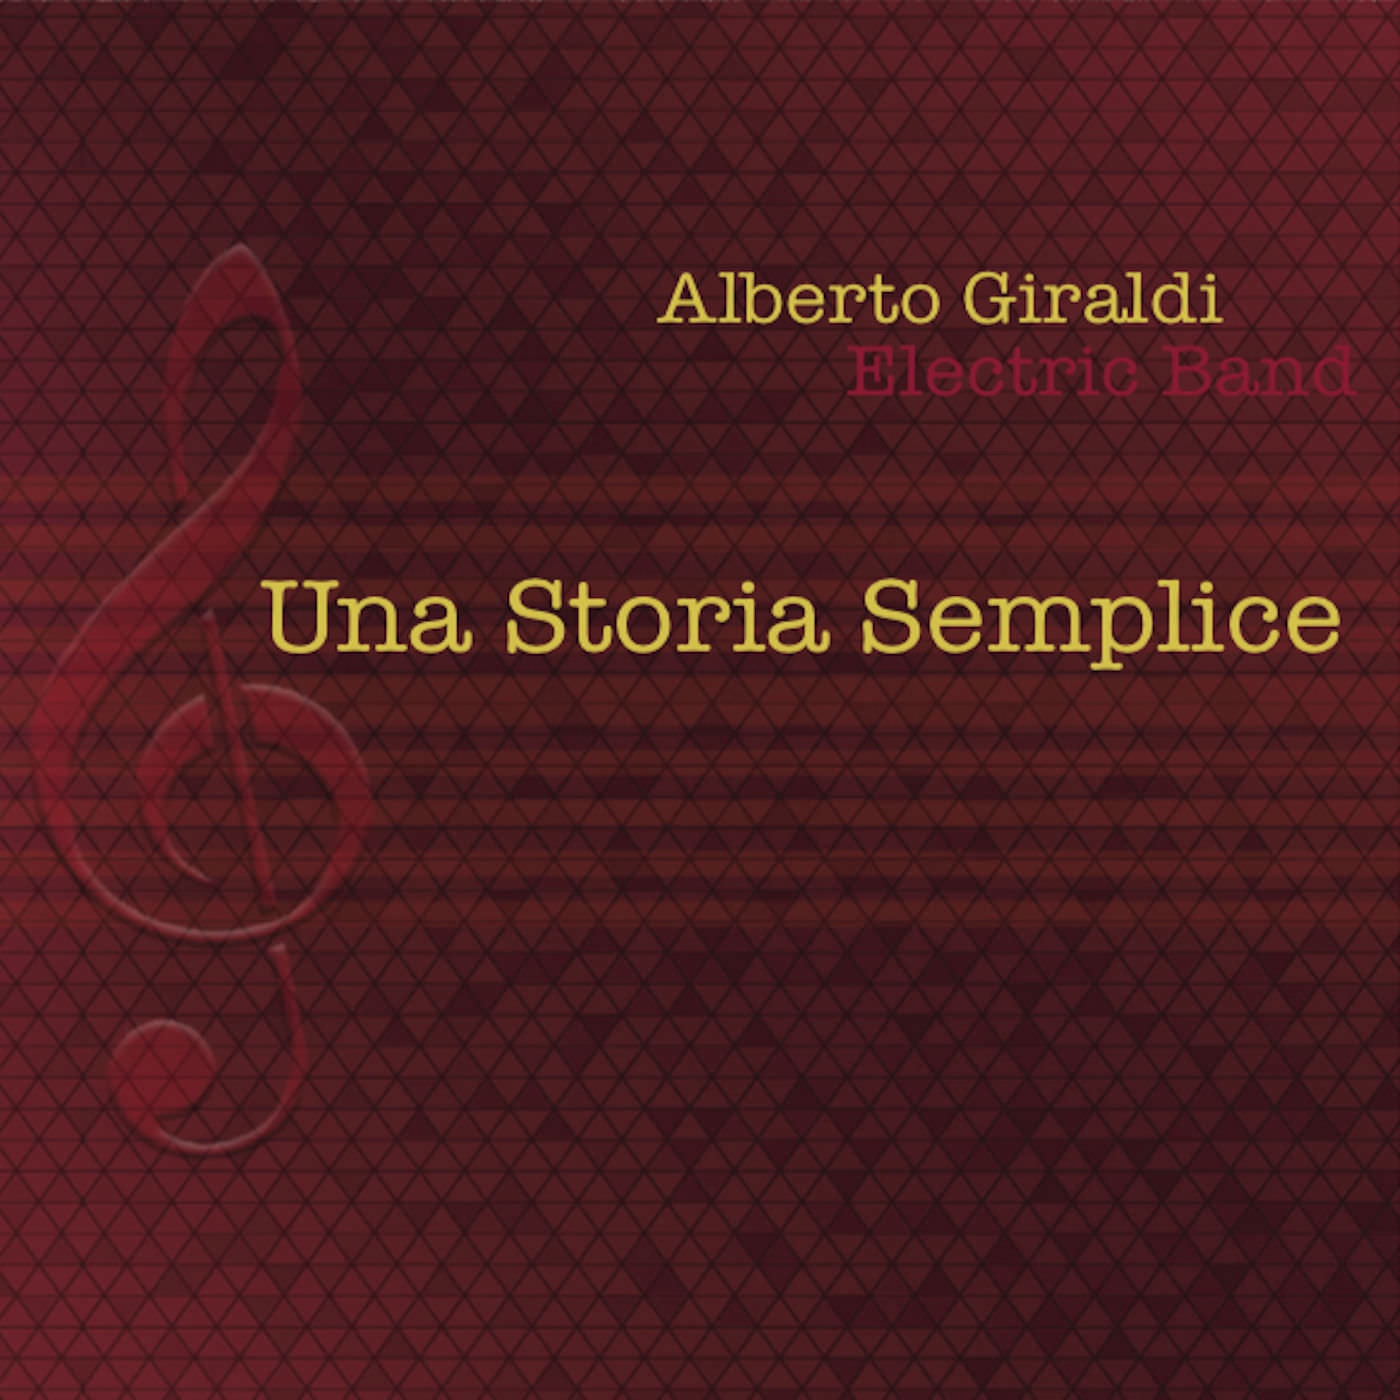 Alberto Giraldi Electric Band – Una storia semplice (2018) [FLAC 24bit/192kHz]